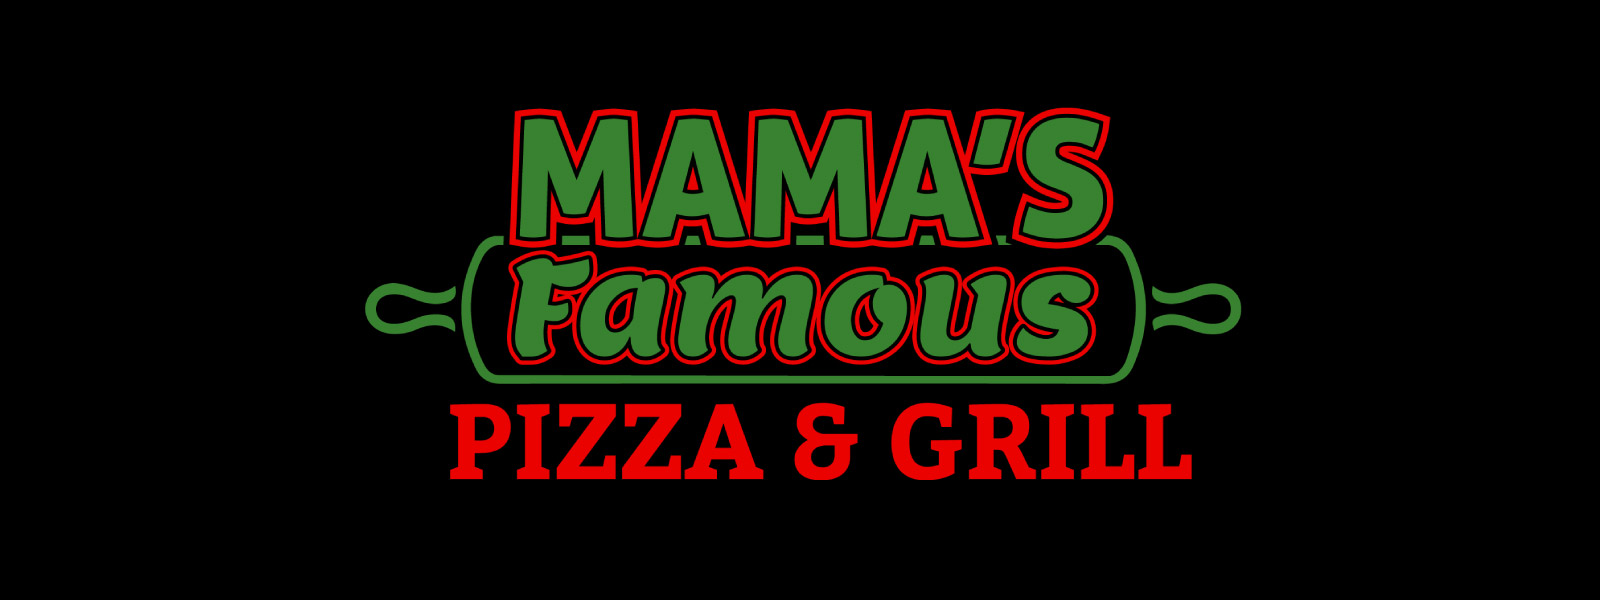 Mamas-Pizza-and-Grill-header-1